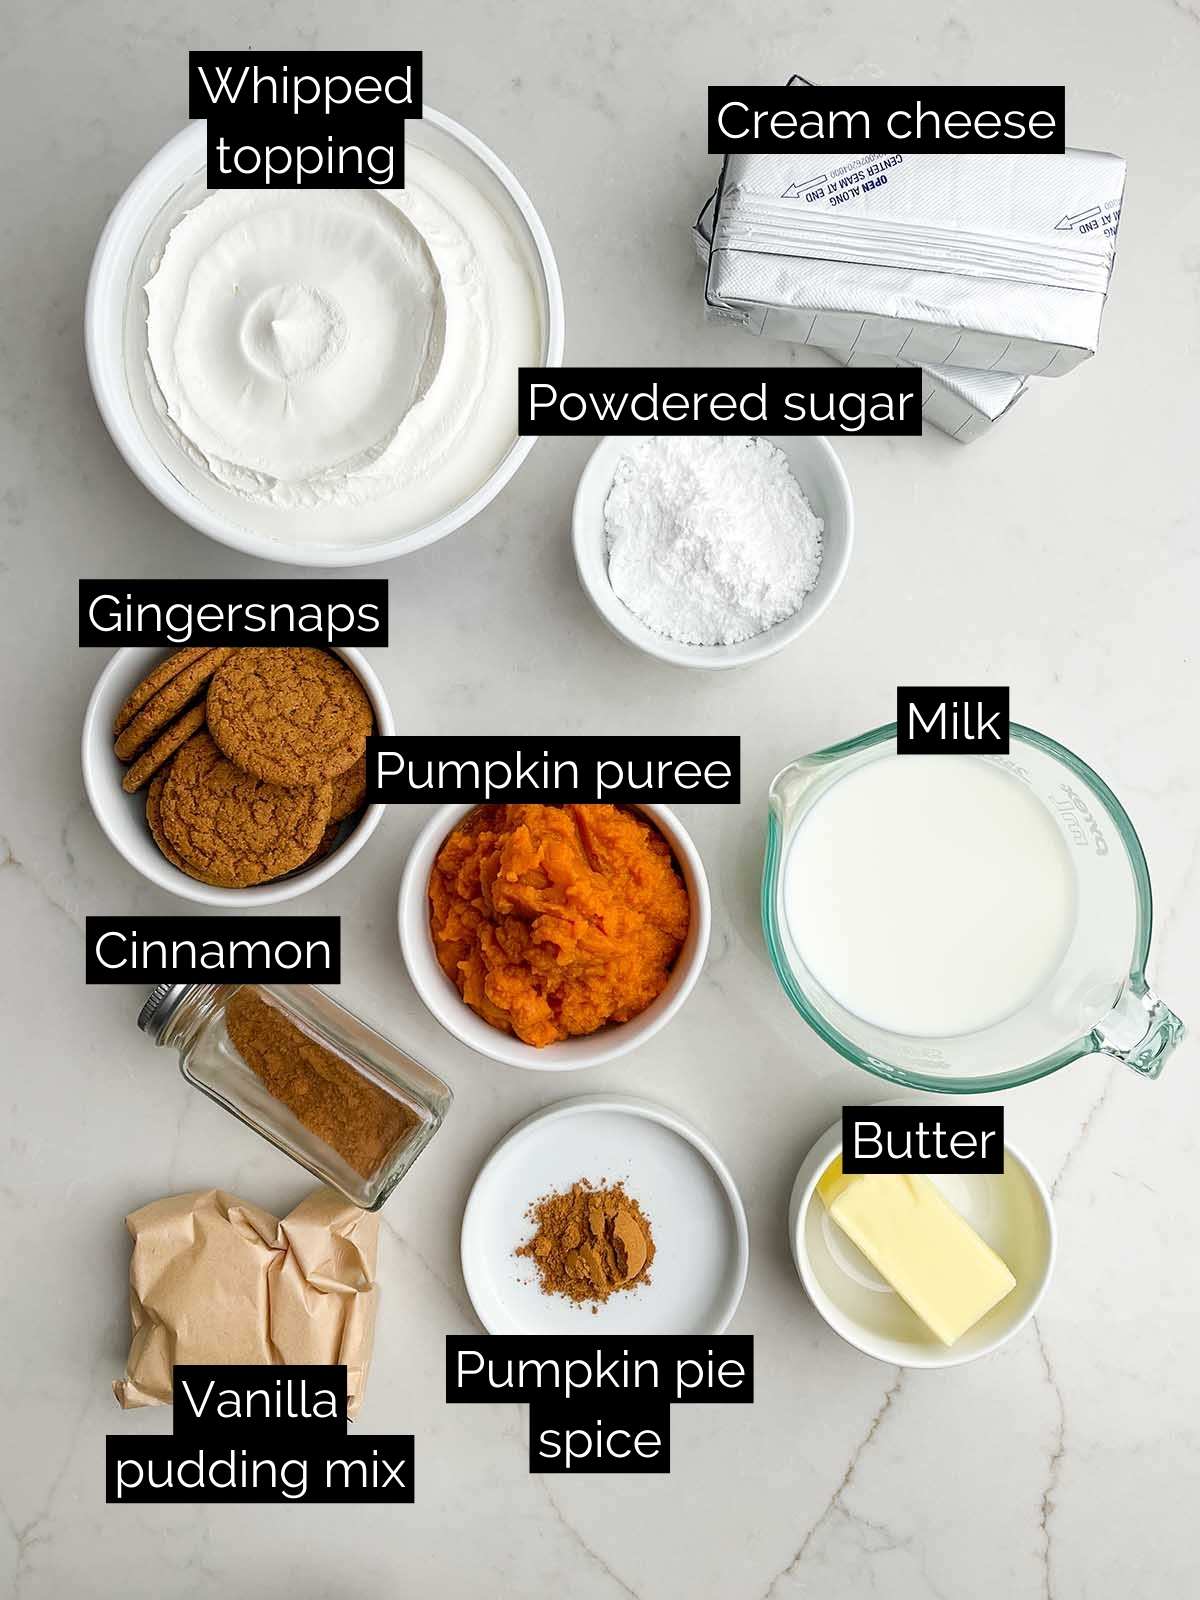 Pumpkin pie in a cup ingredients